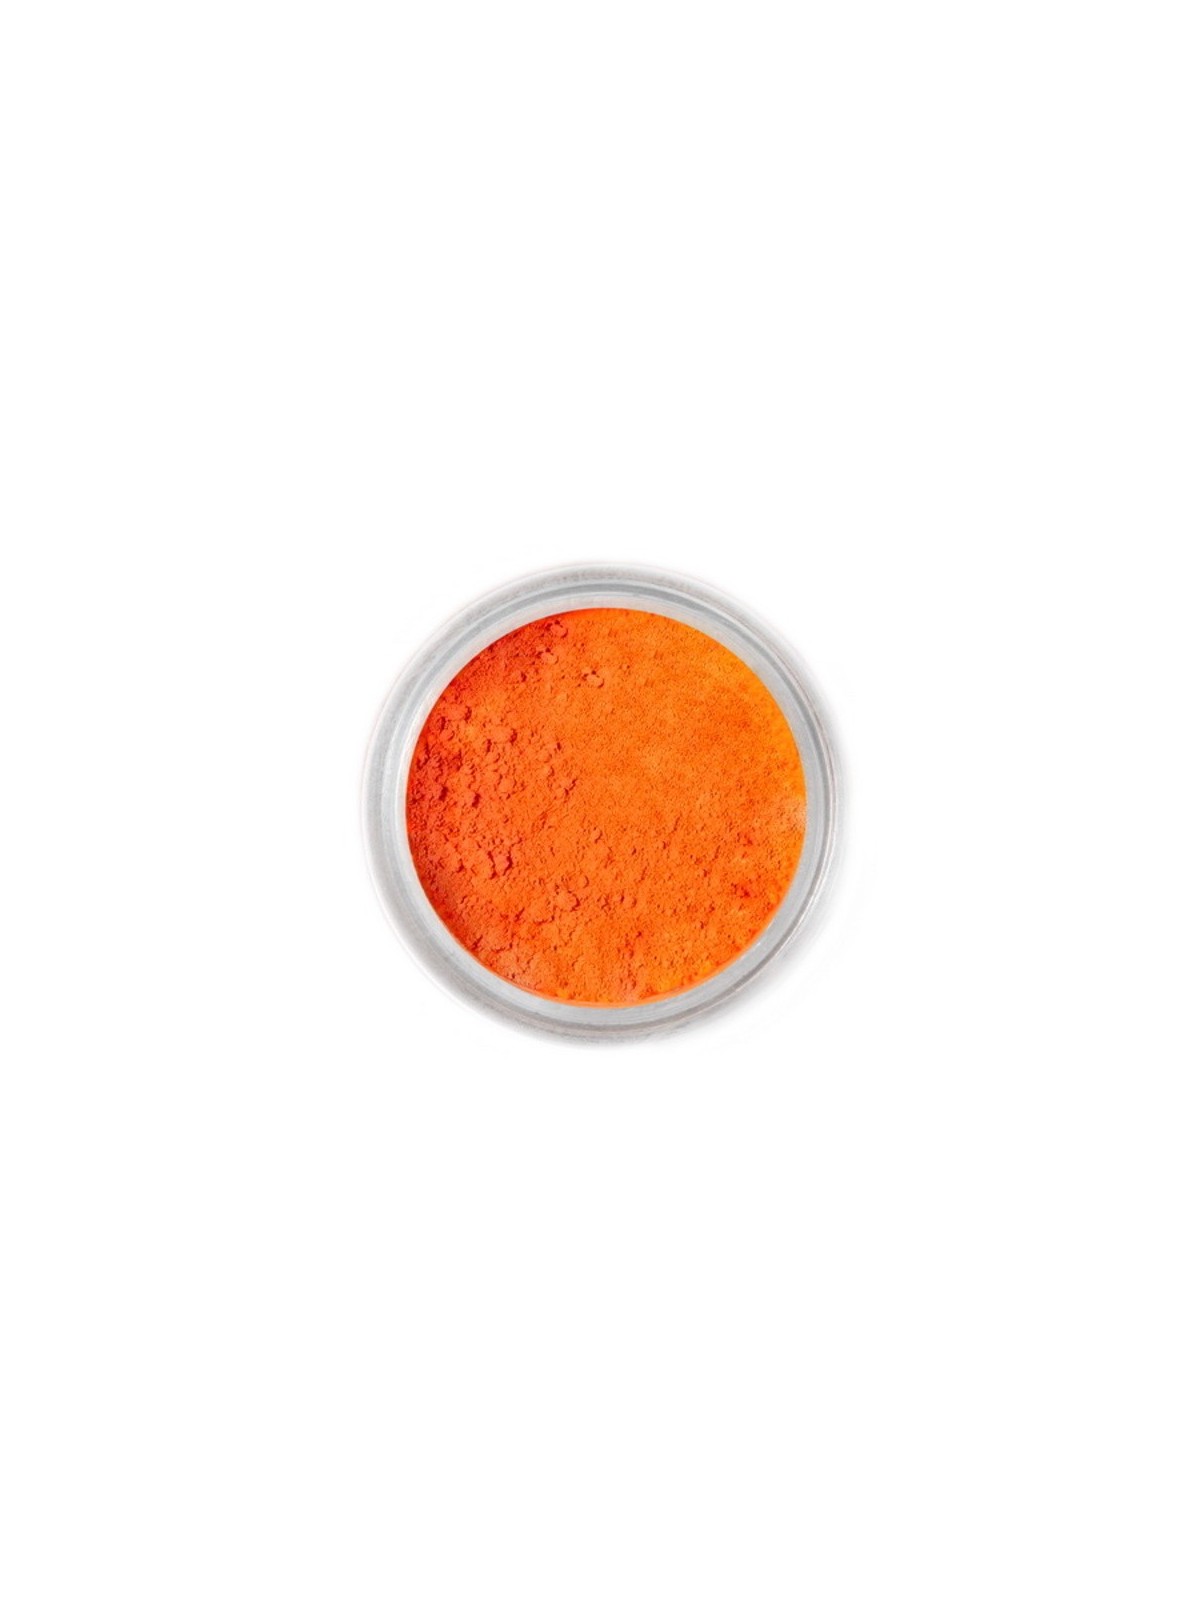 Jedlá prachová barva Fractal - Orange, Narancssárga (2,5 g)